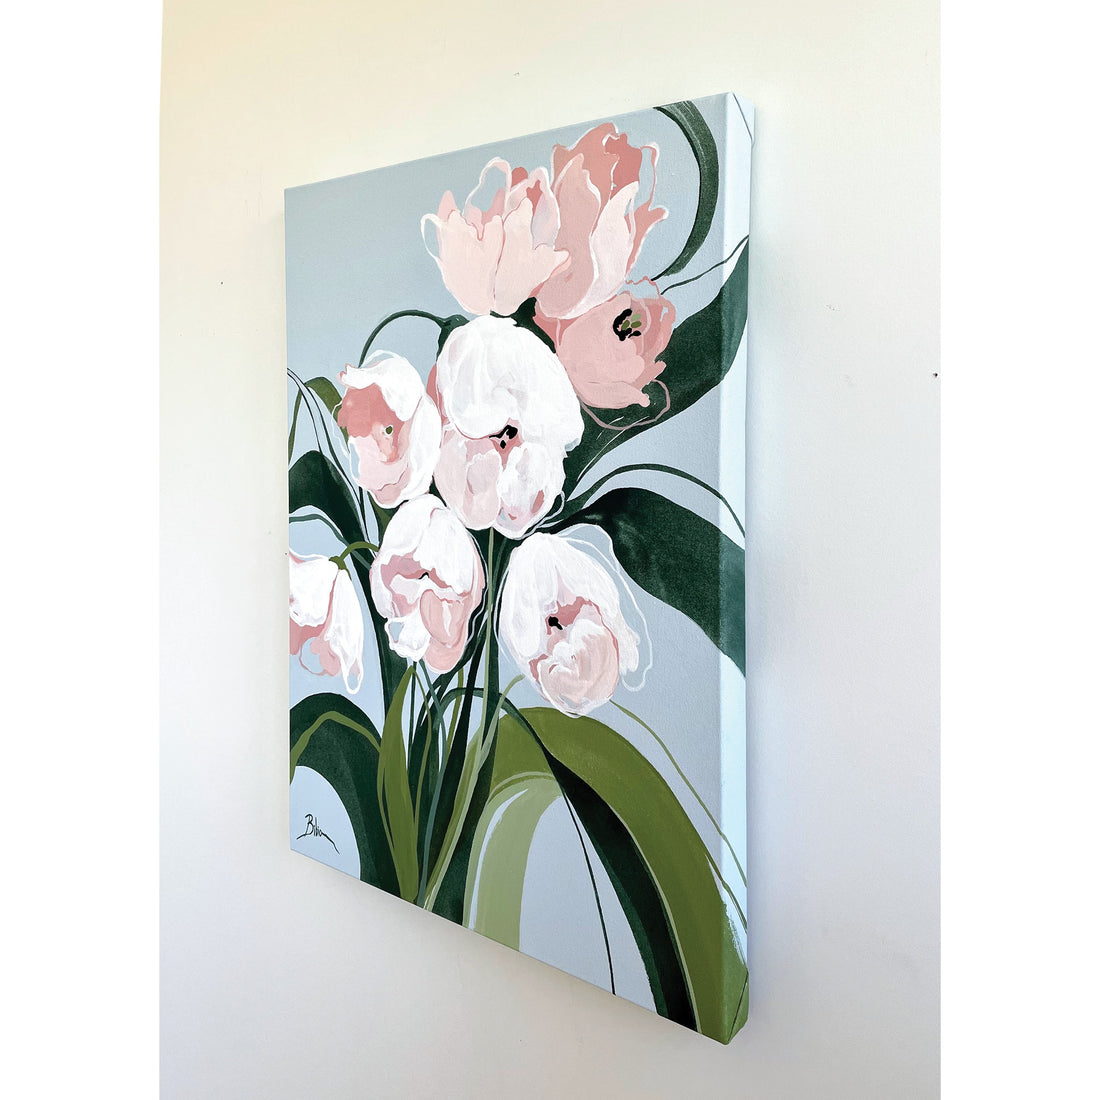 Bibiana Hooper "Solari 10" abstract floral painting Canadian artist